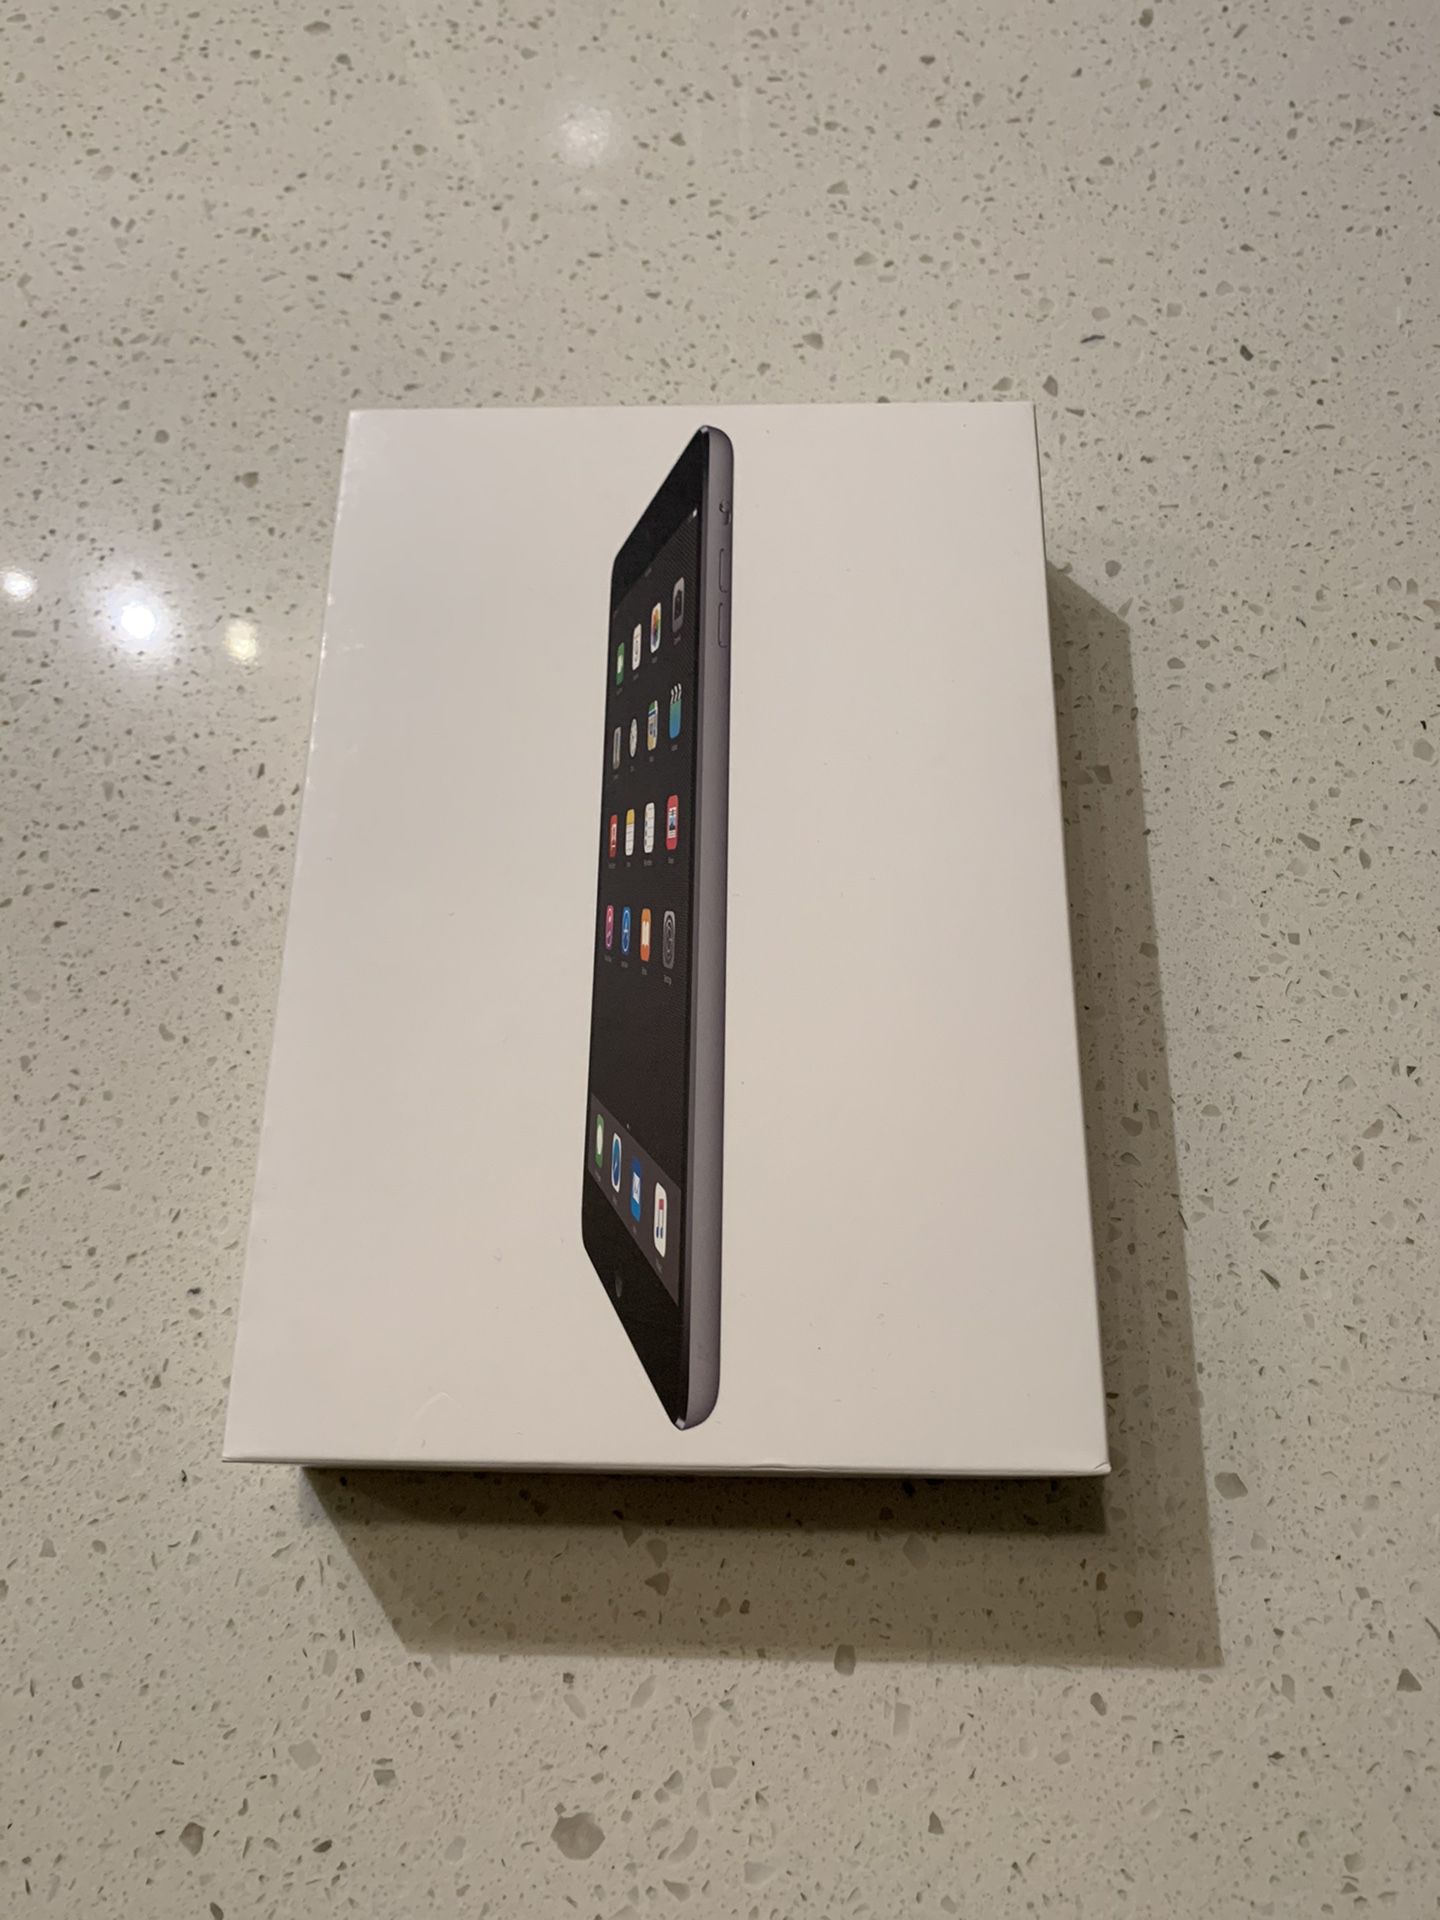 Apple iPad Mini 2 Box